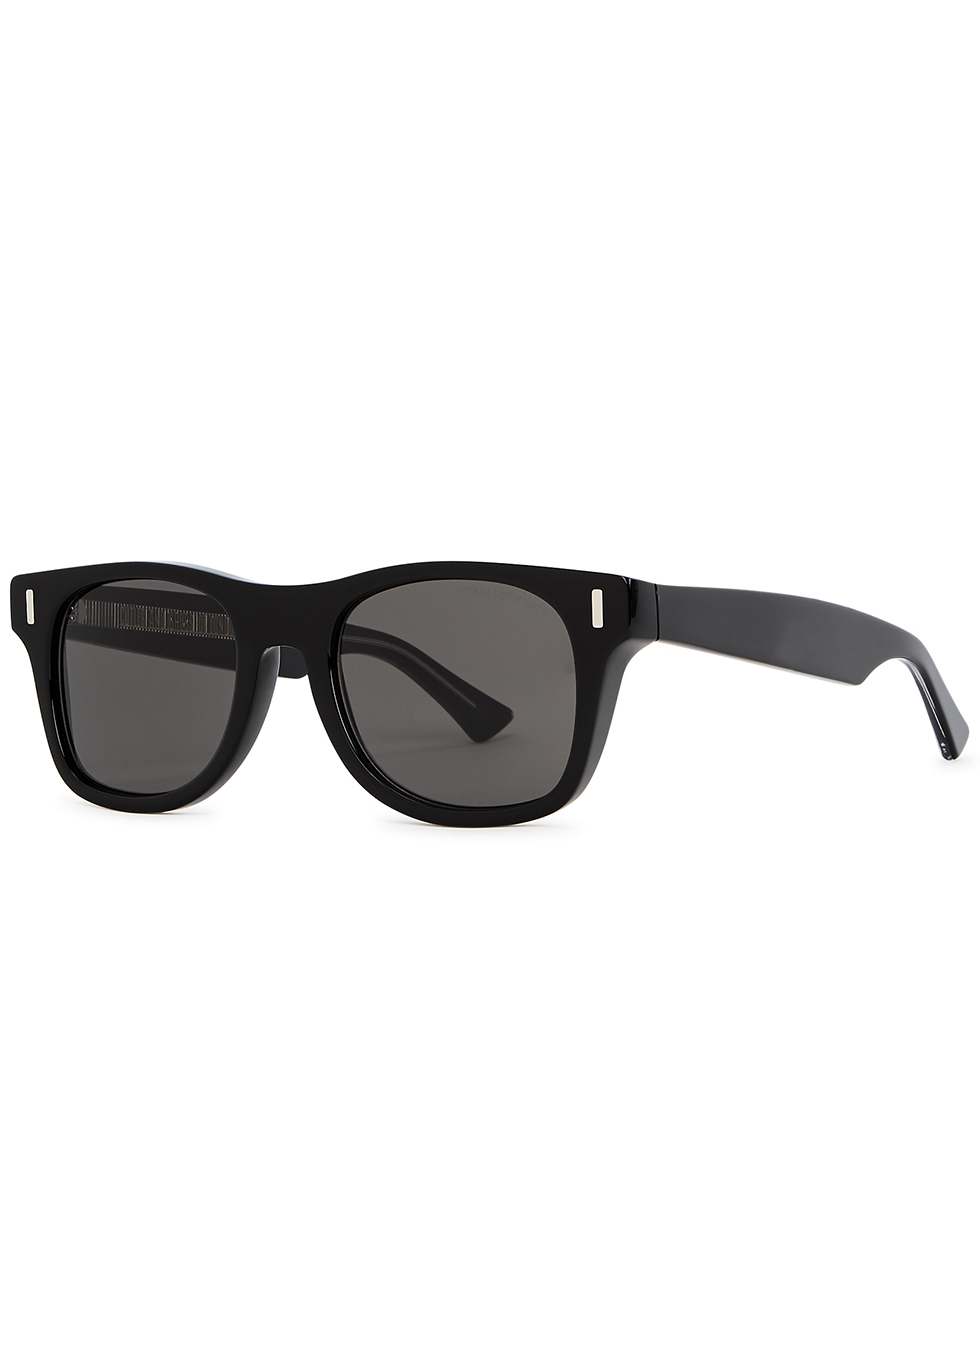 black wayfarer style sunglasses